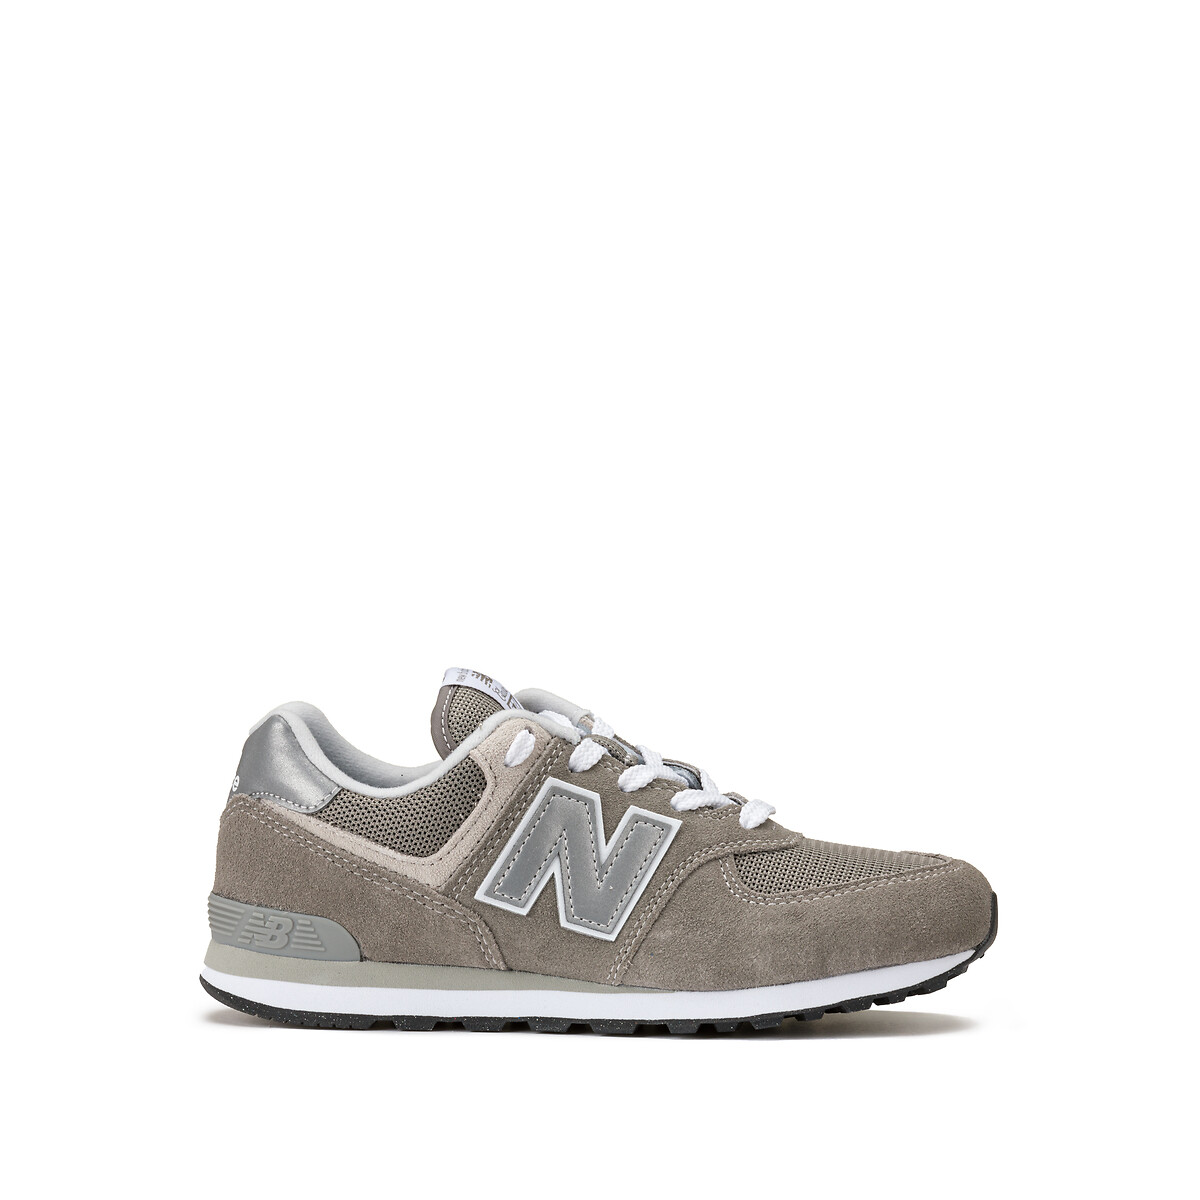 Sneakers GC574 von New Balance